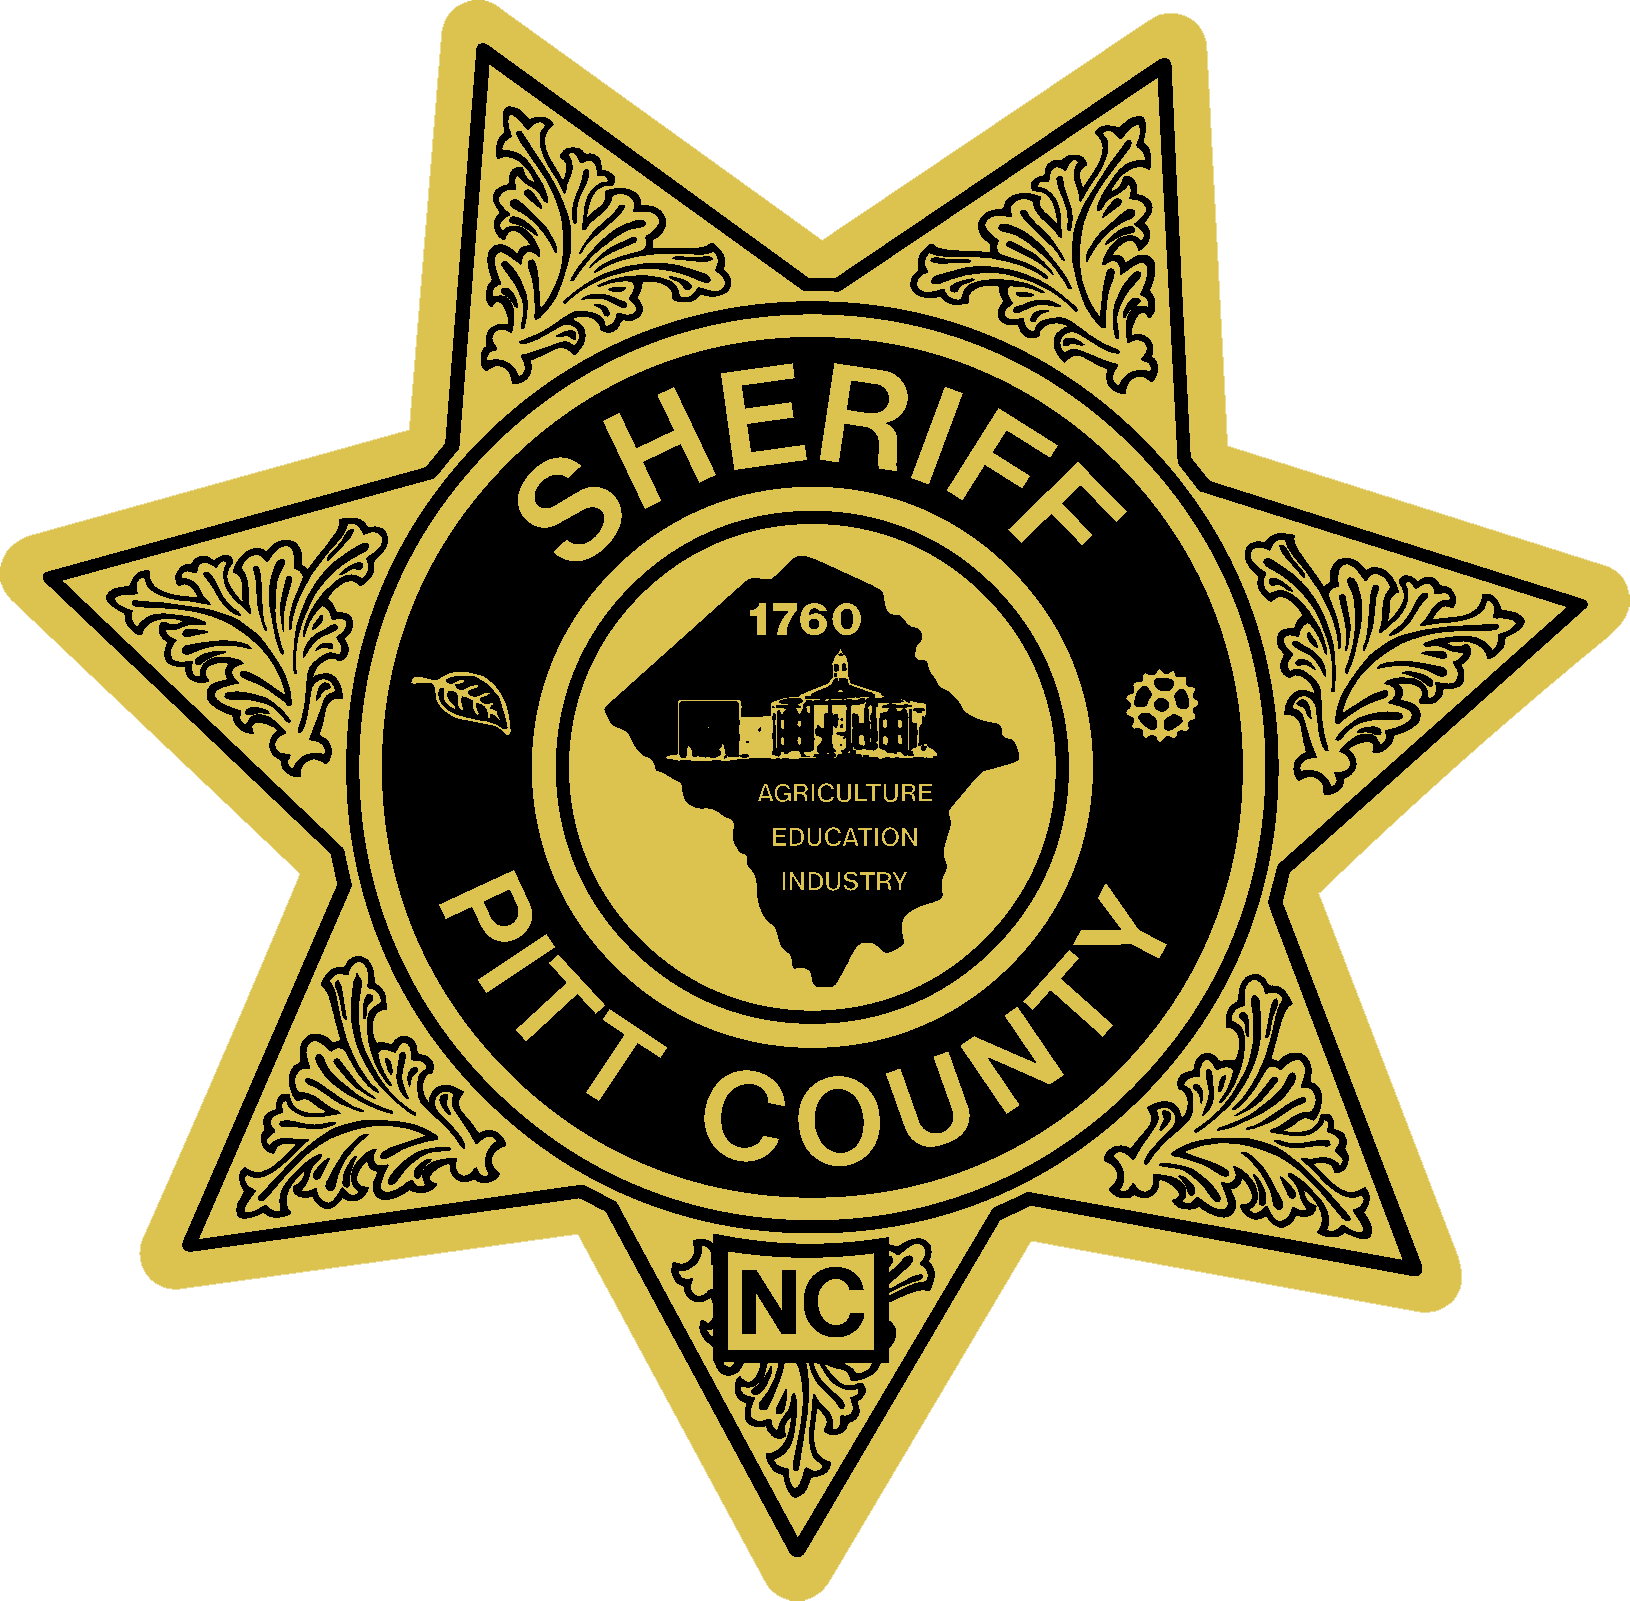 Distintivo de xerife